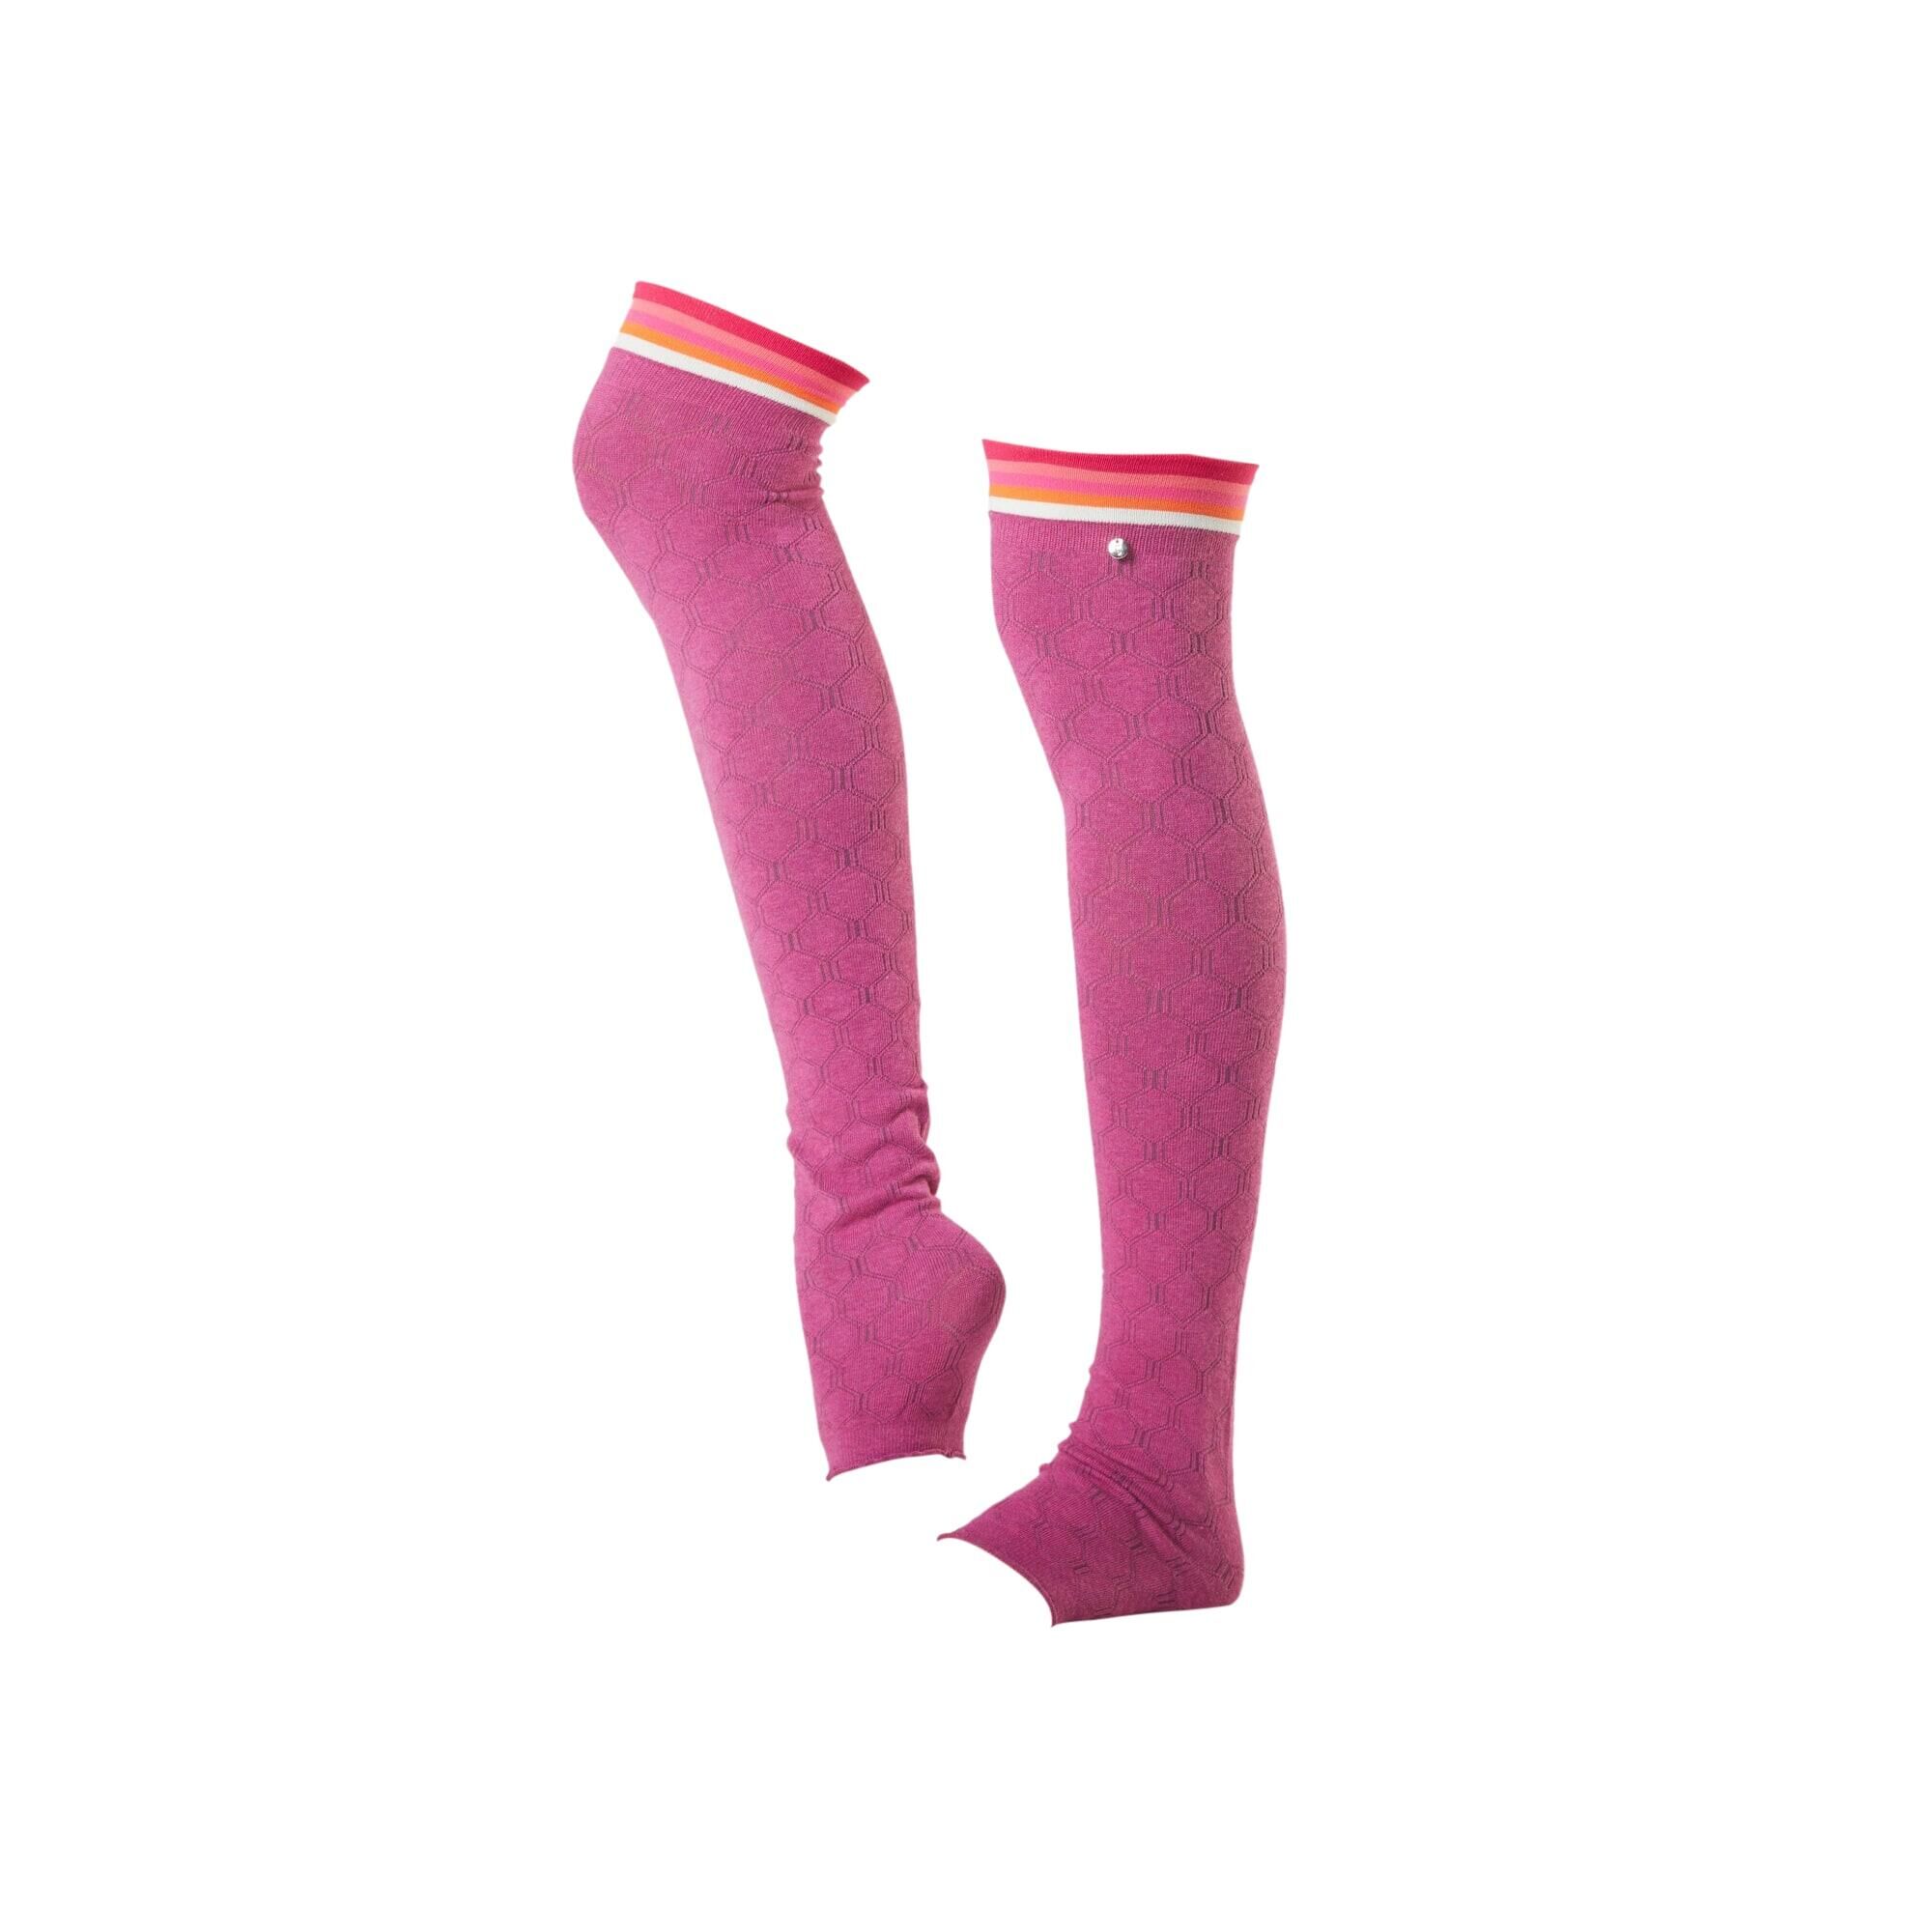 Womens/Ladies Bellarina Gypsy Half Toe Socks (Light Blue/Pink) FITNESS-MAD  - Decathlon